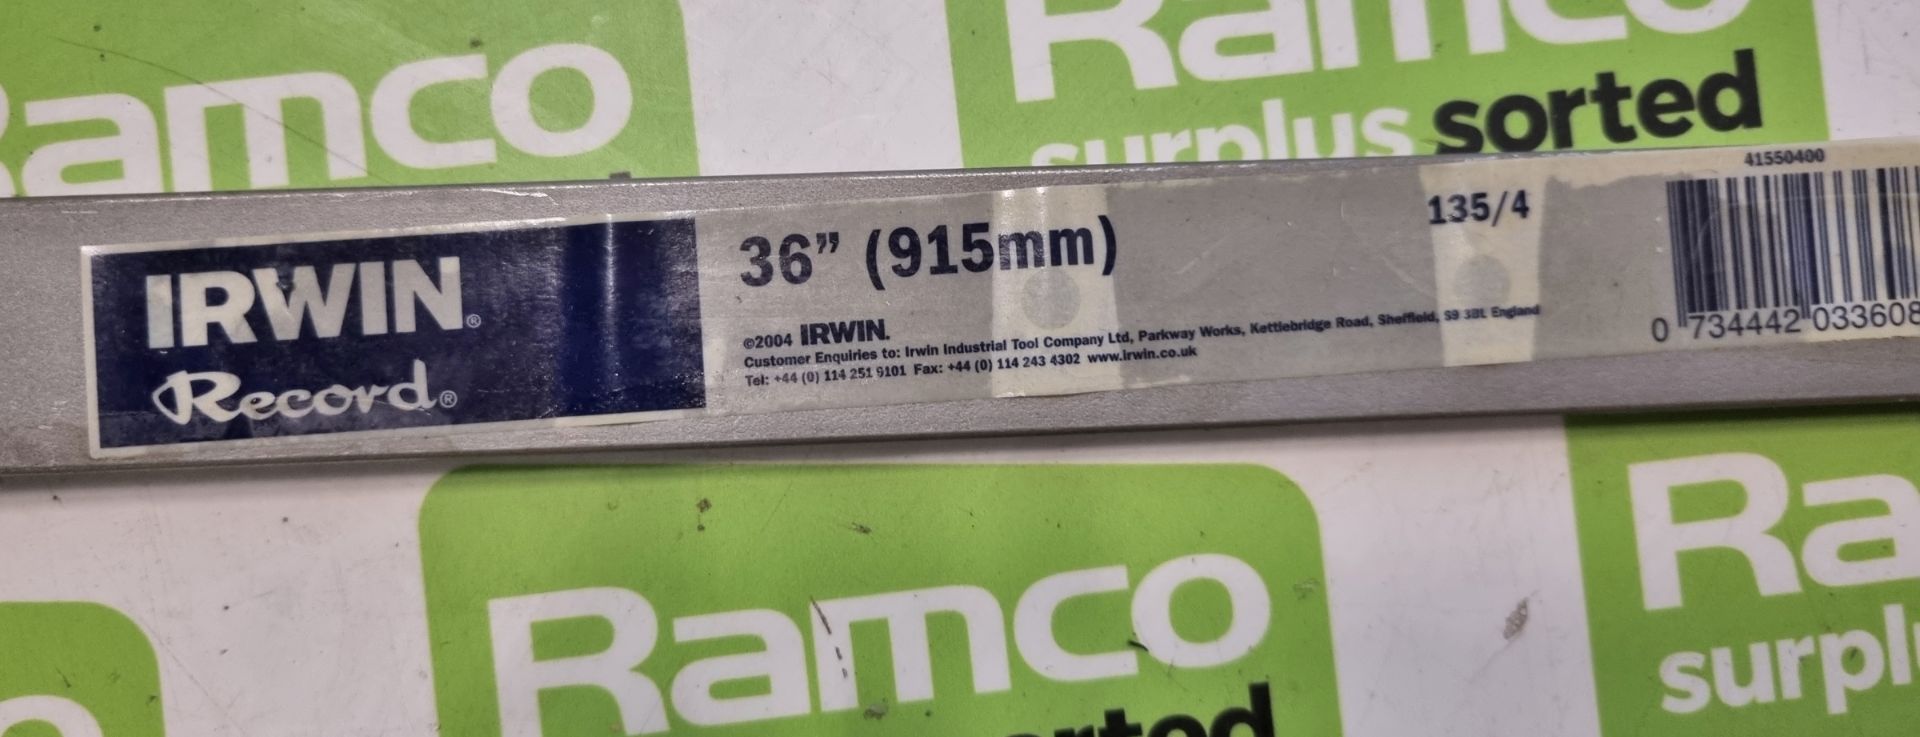 Irwin Record 135/4 36 inch (915mm) sash clamp - Image 4 of 4